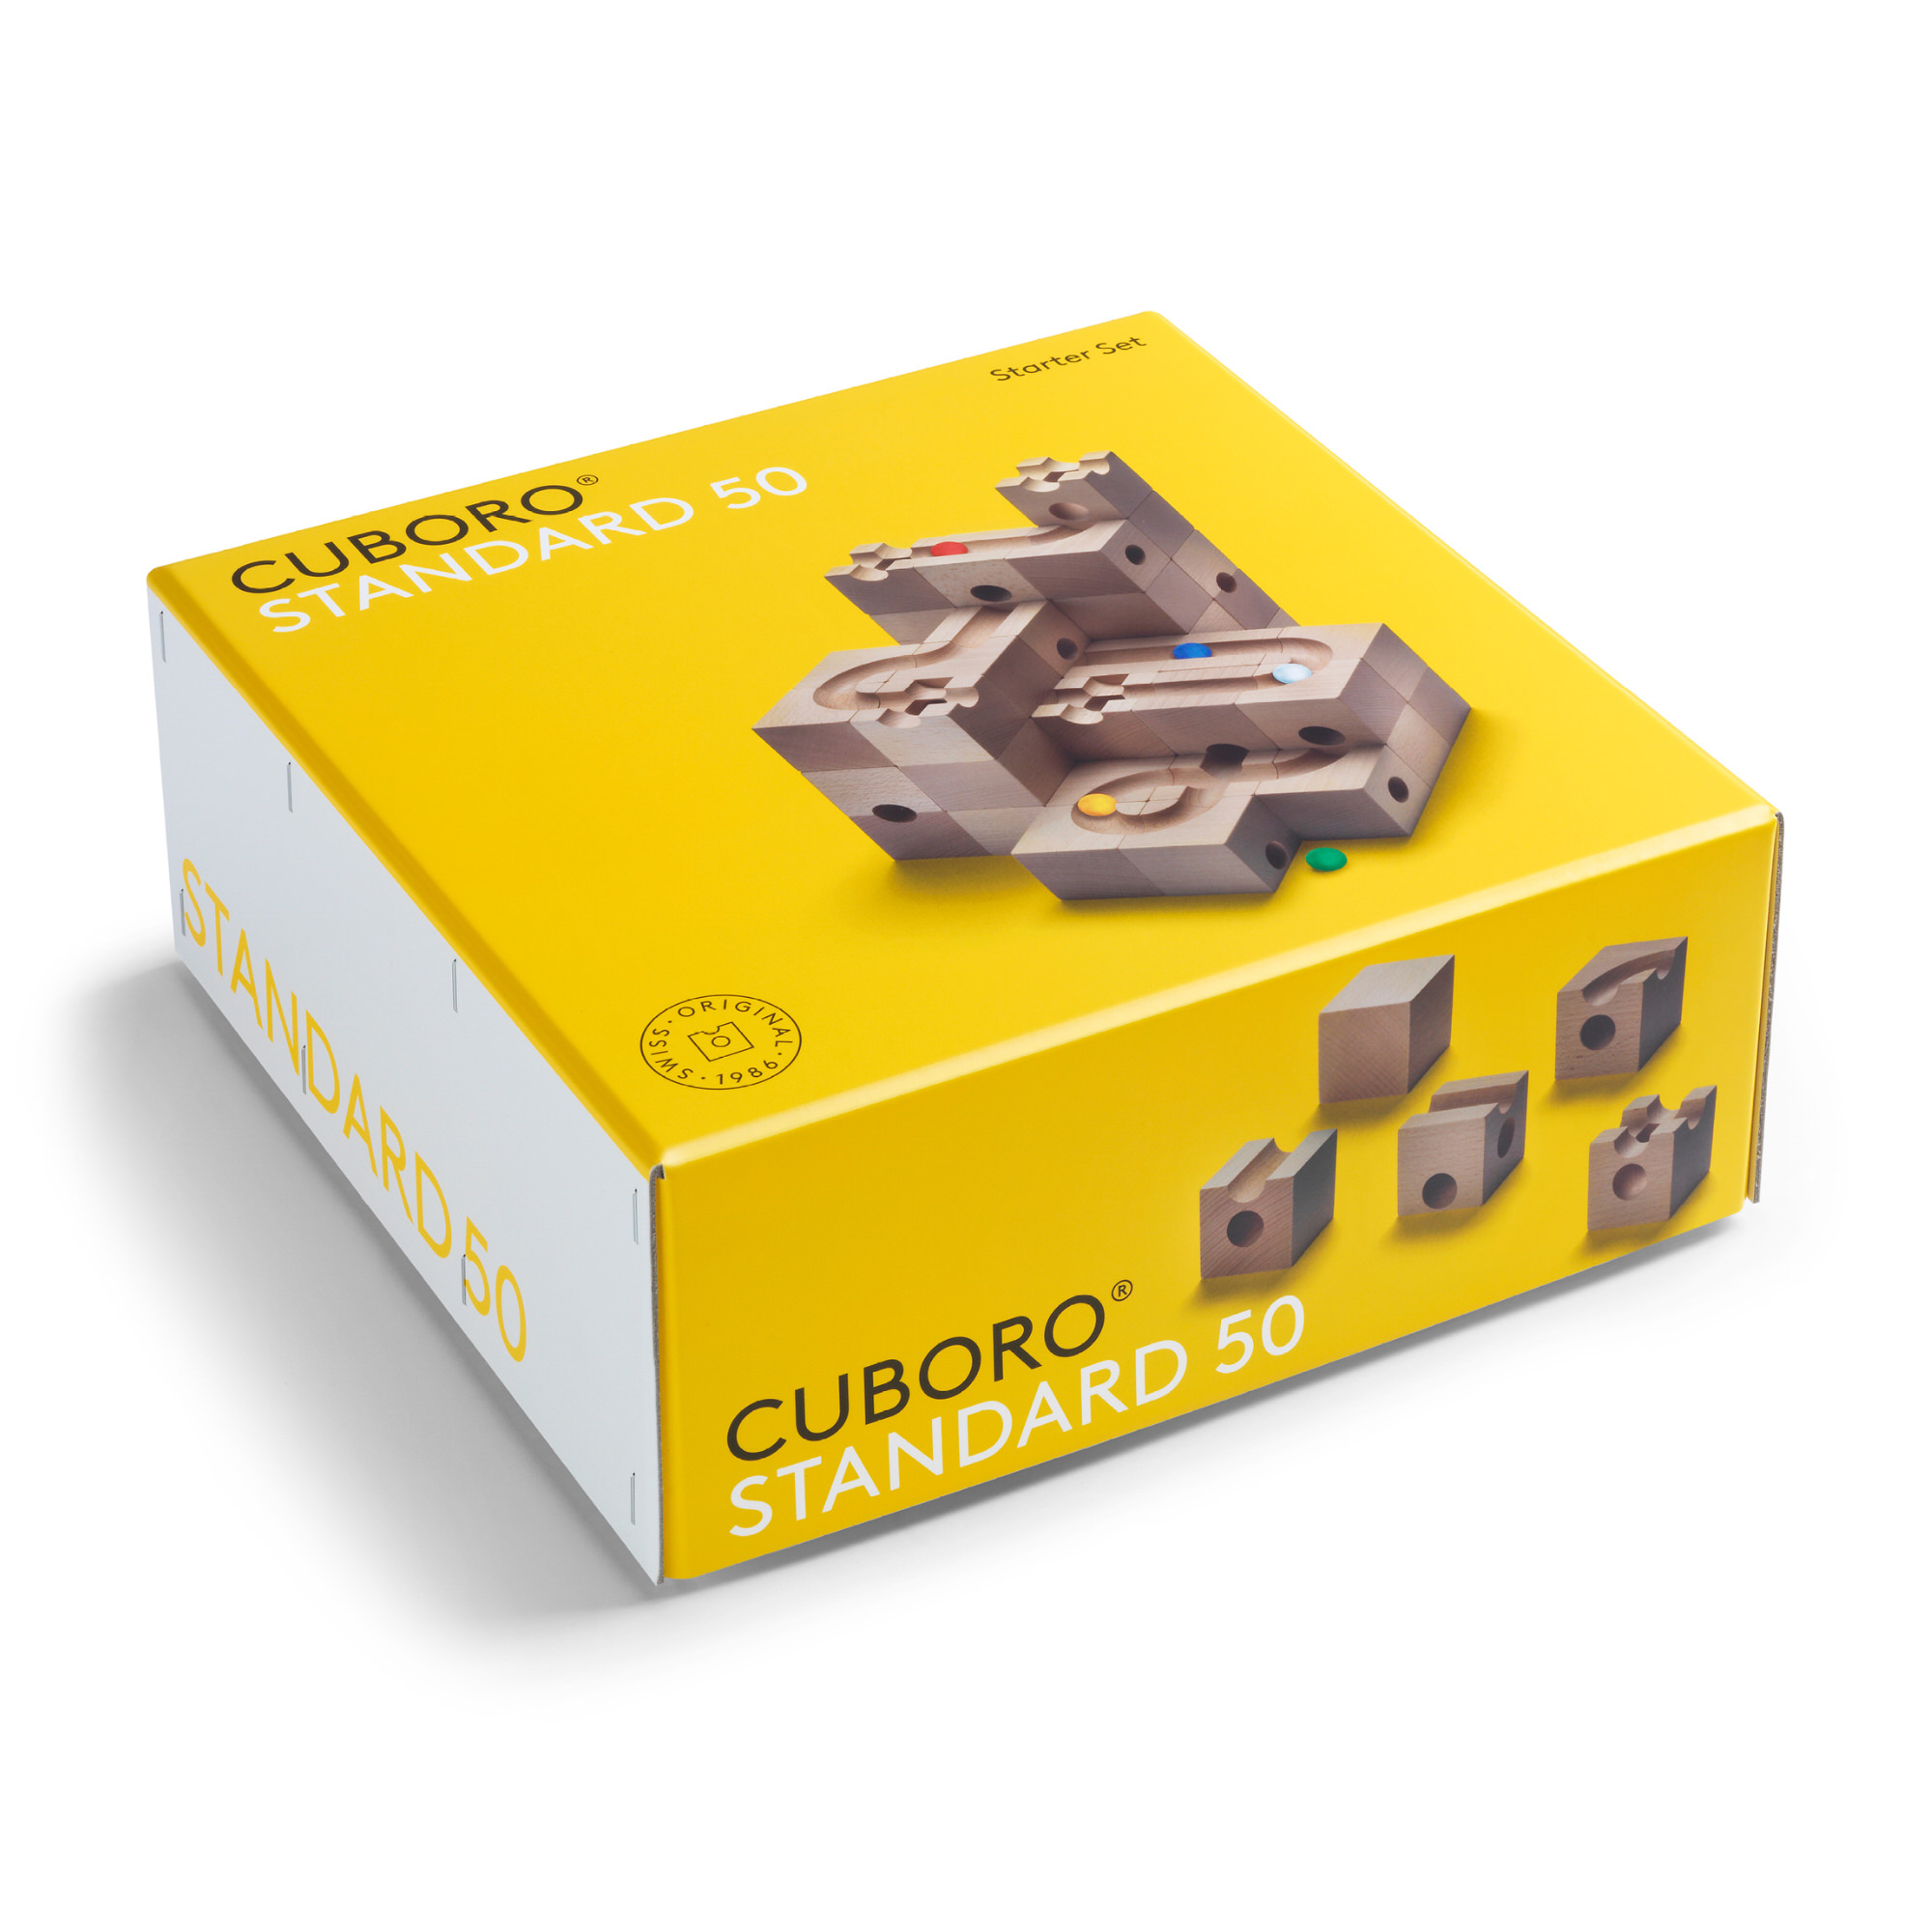 CUBORO Standard 50 marble run Packaging